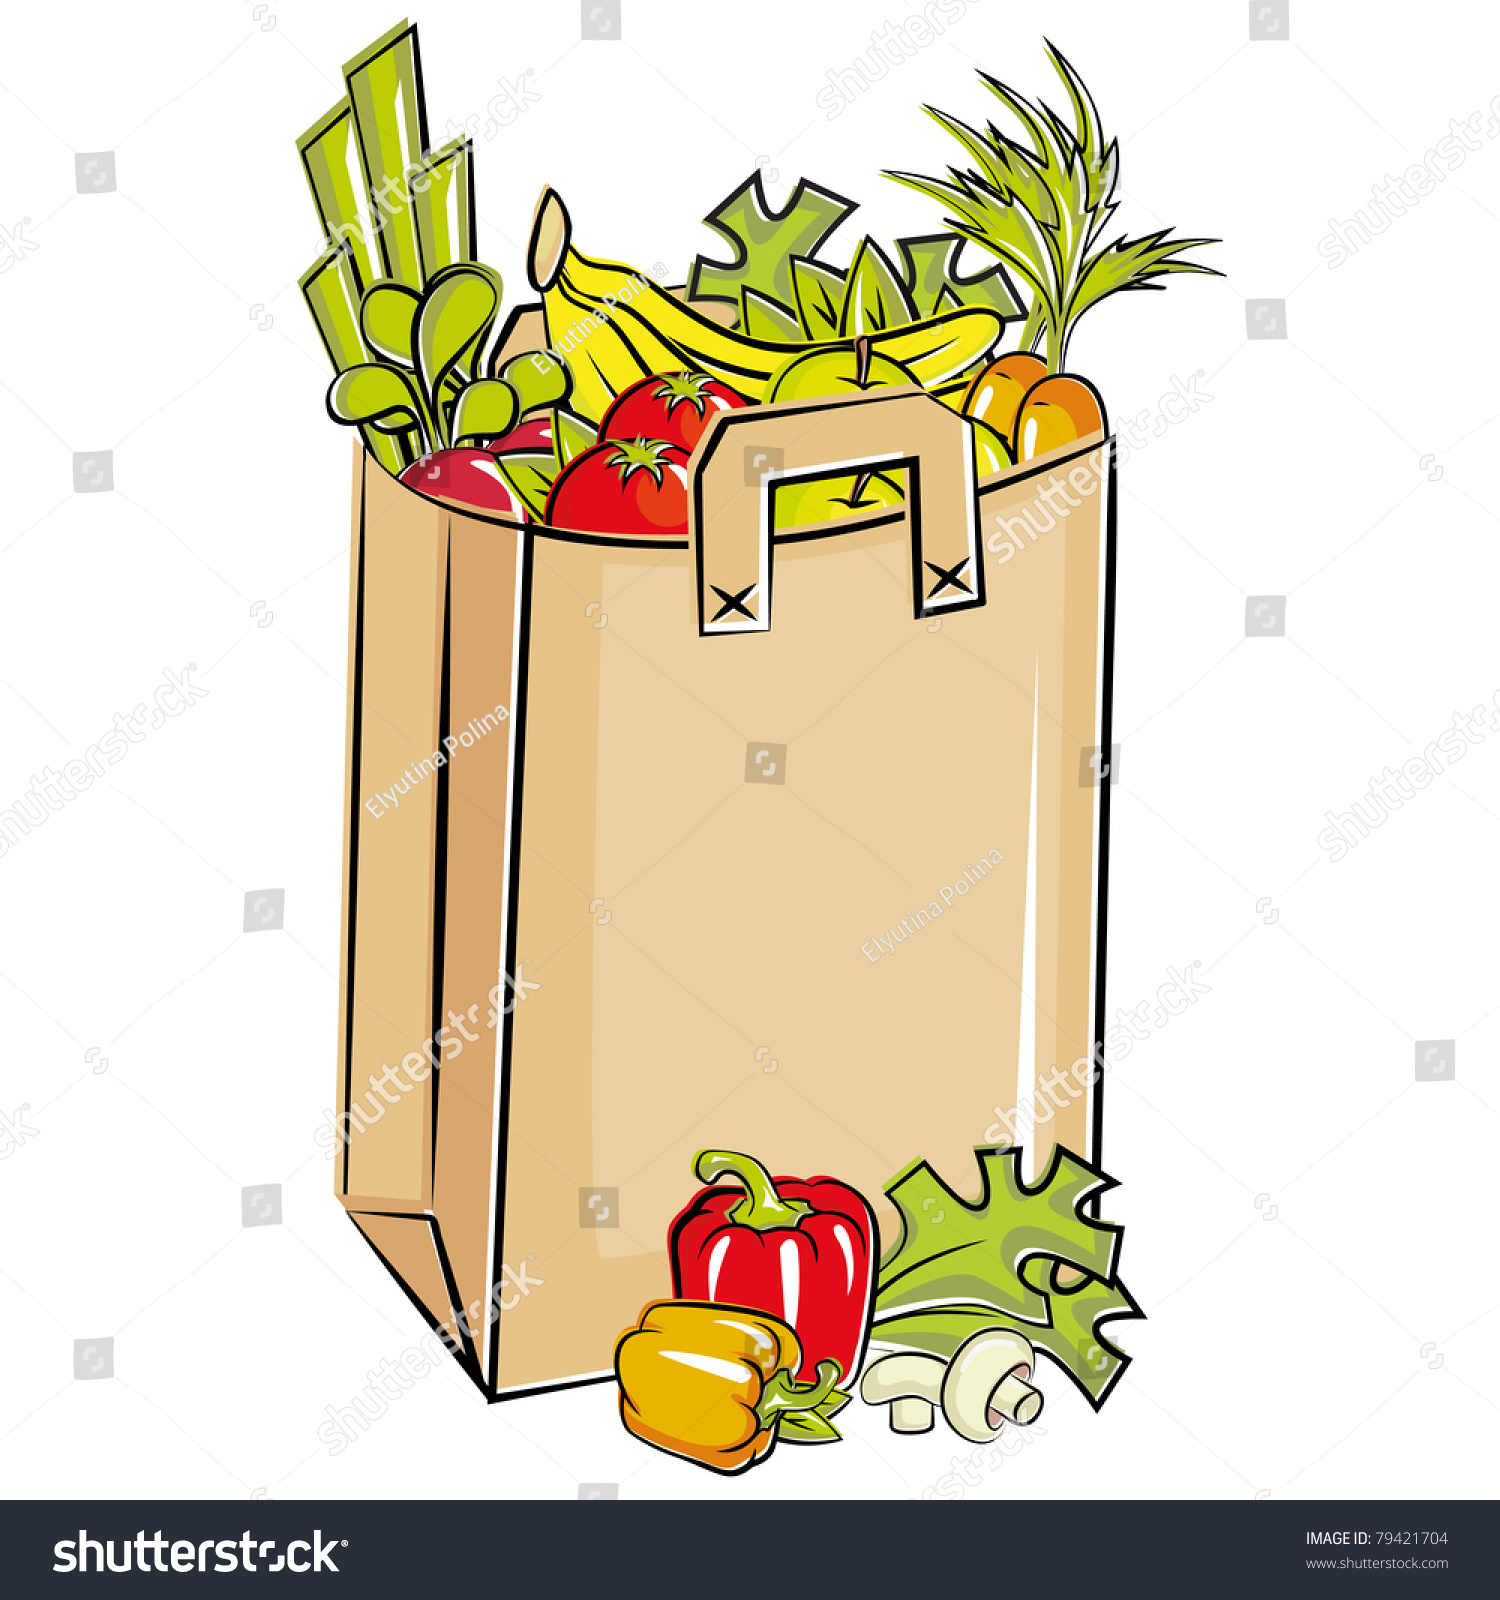 Grocery Bag Full Of Groceries Stock Vector Illustration 79421704